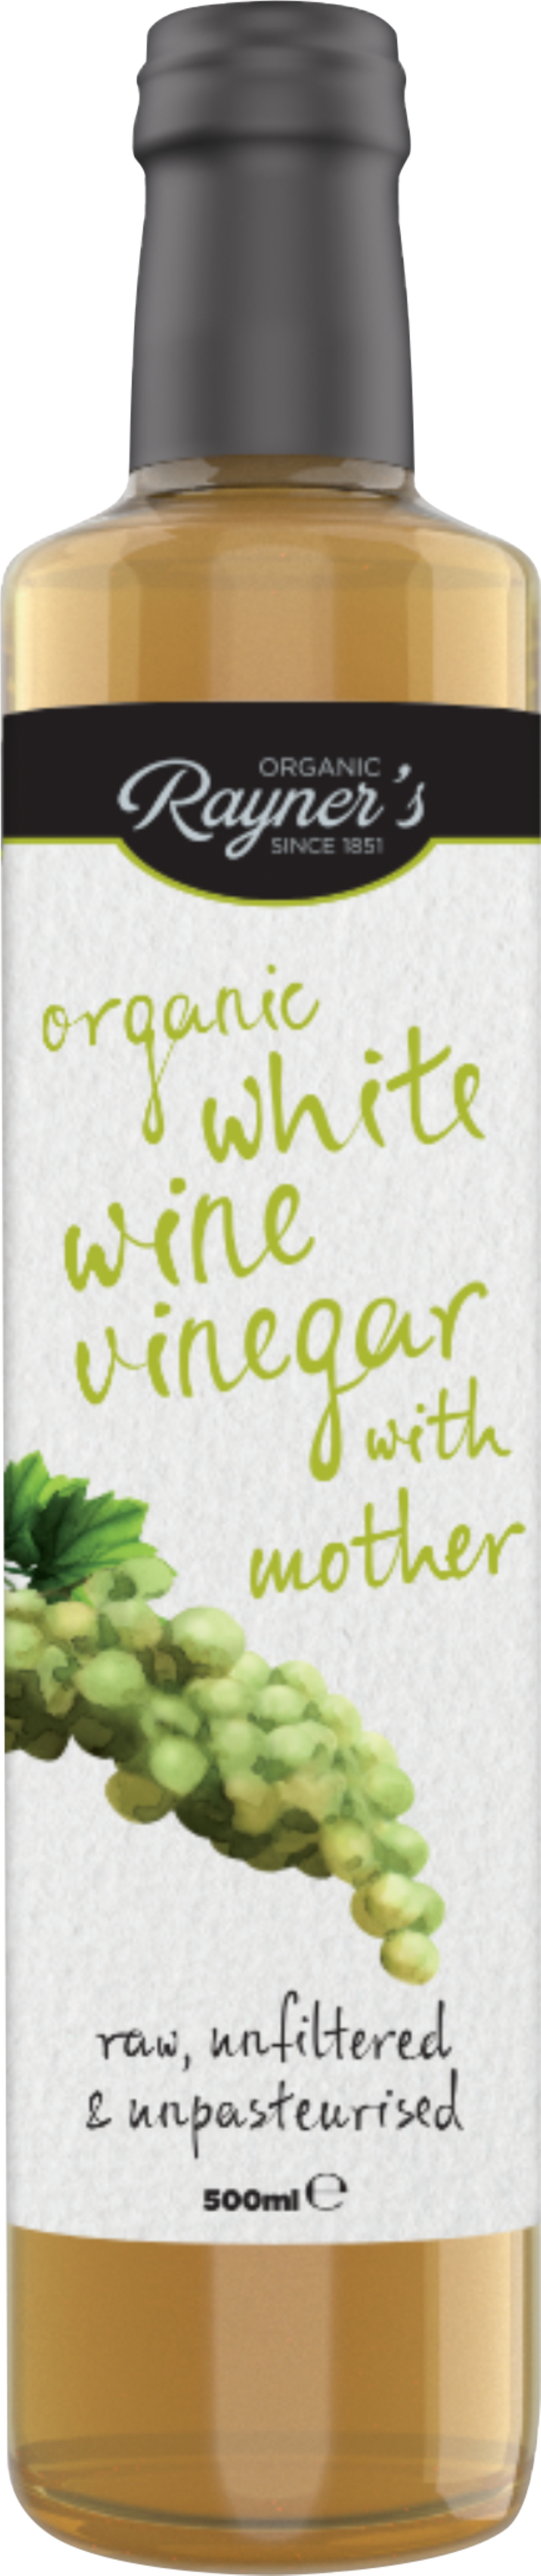 Organic White Wine Vinegar with Mother - 500ml - Rayner's